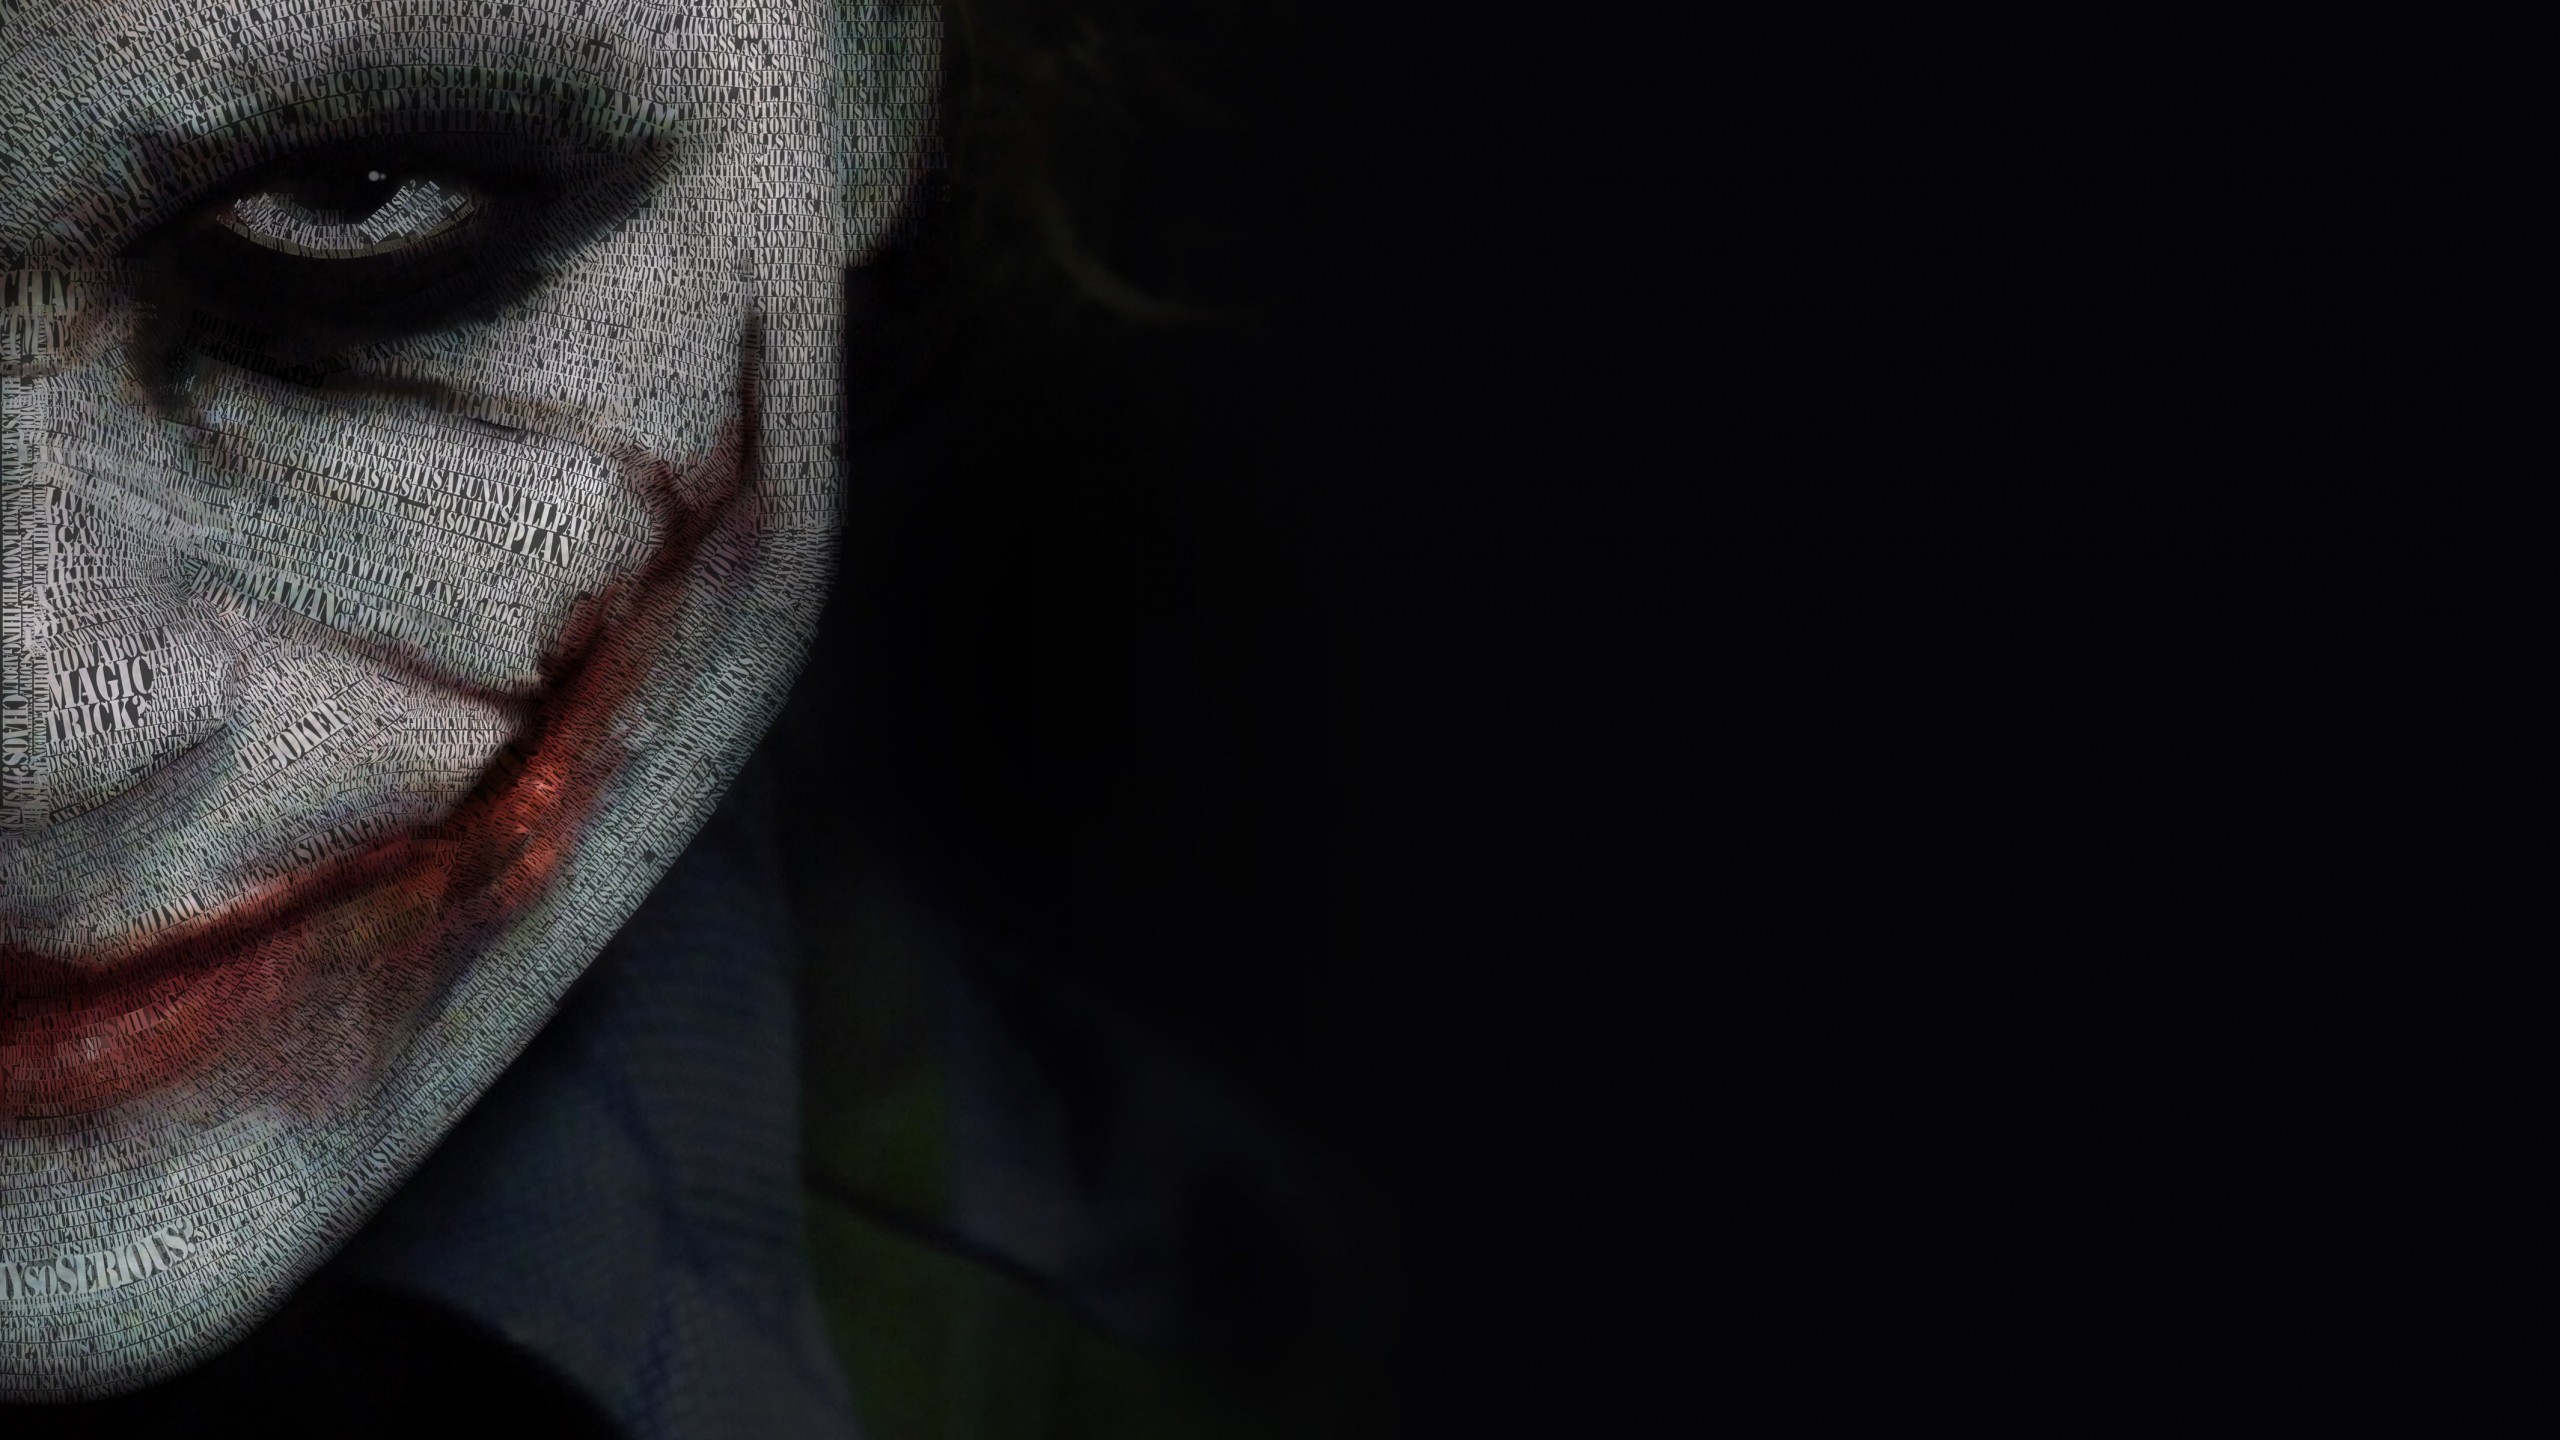 The Joker Typeface Portrait Wallpaper for Desktop 2560x1440